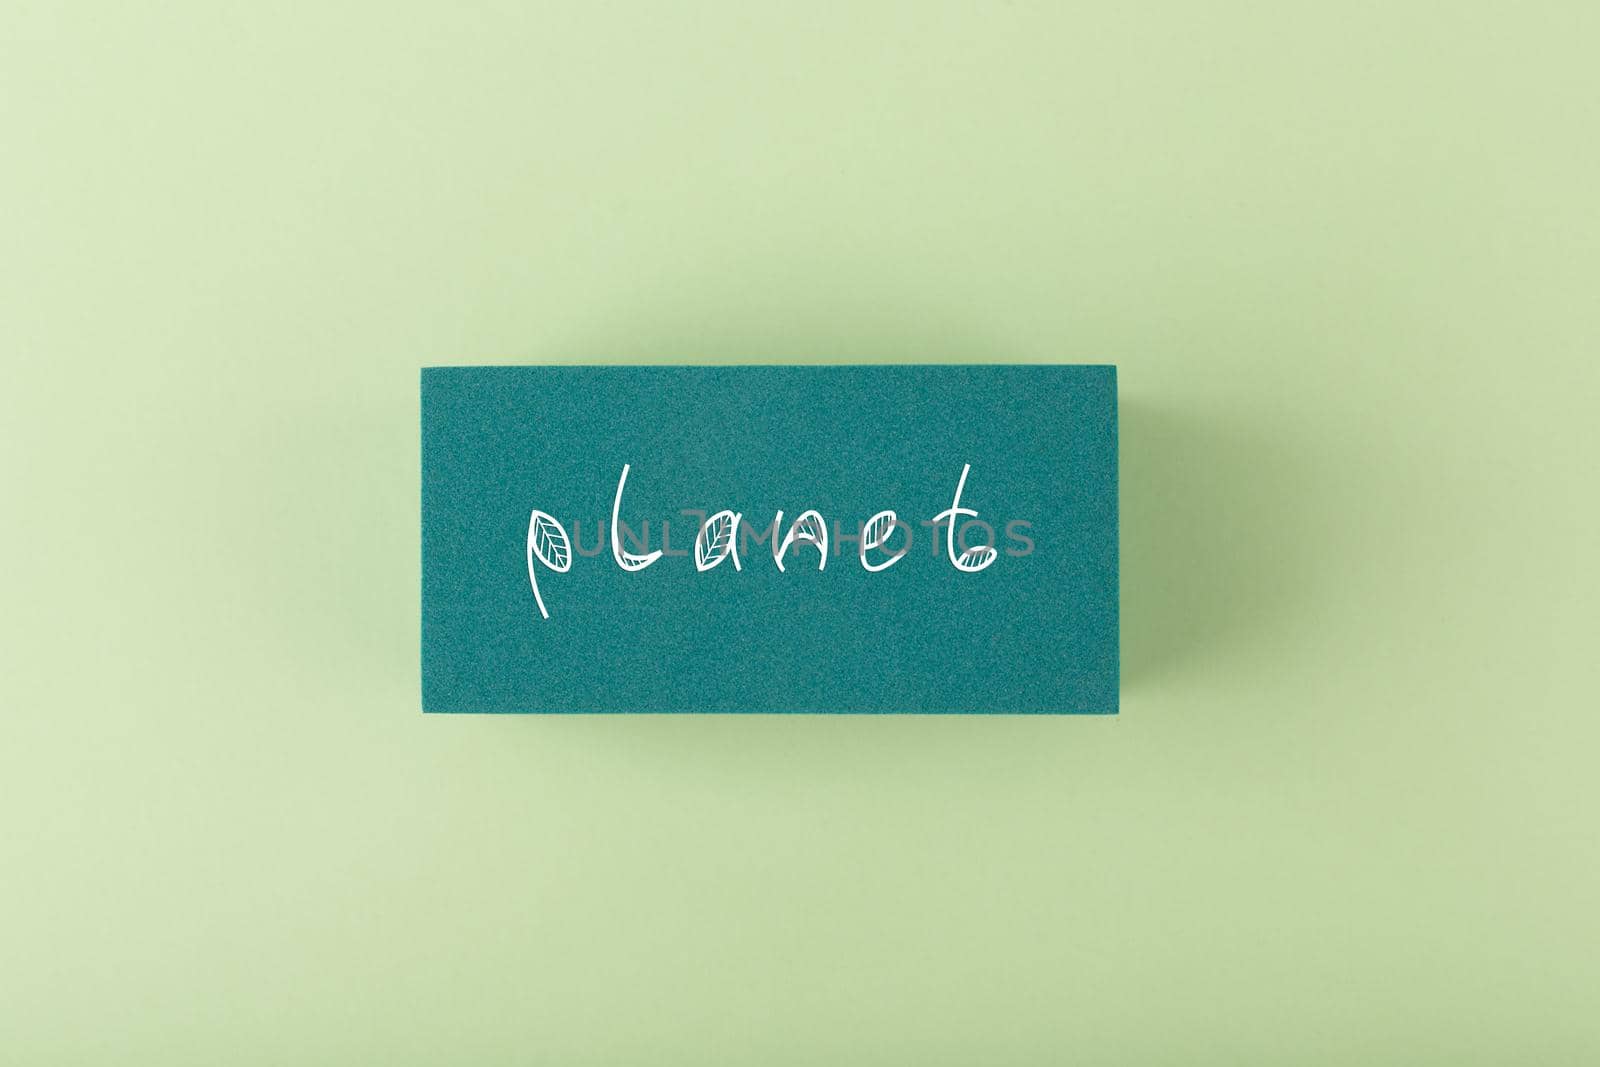 Planet handwritten on dark green rectangle against light green background by Senorina_Irina